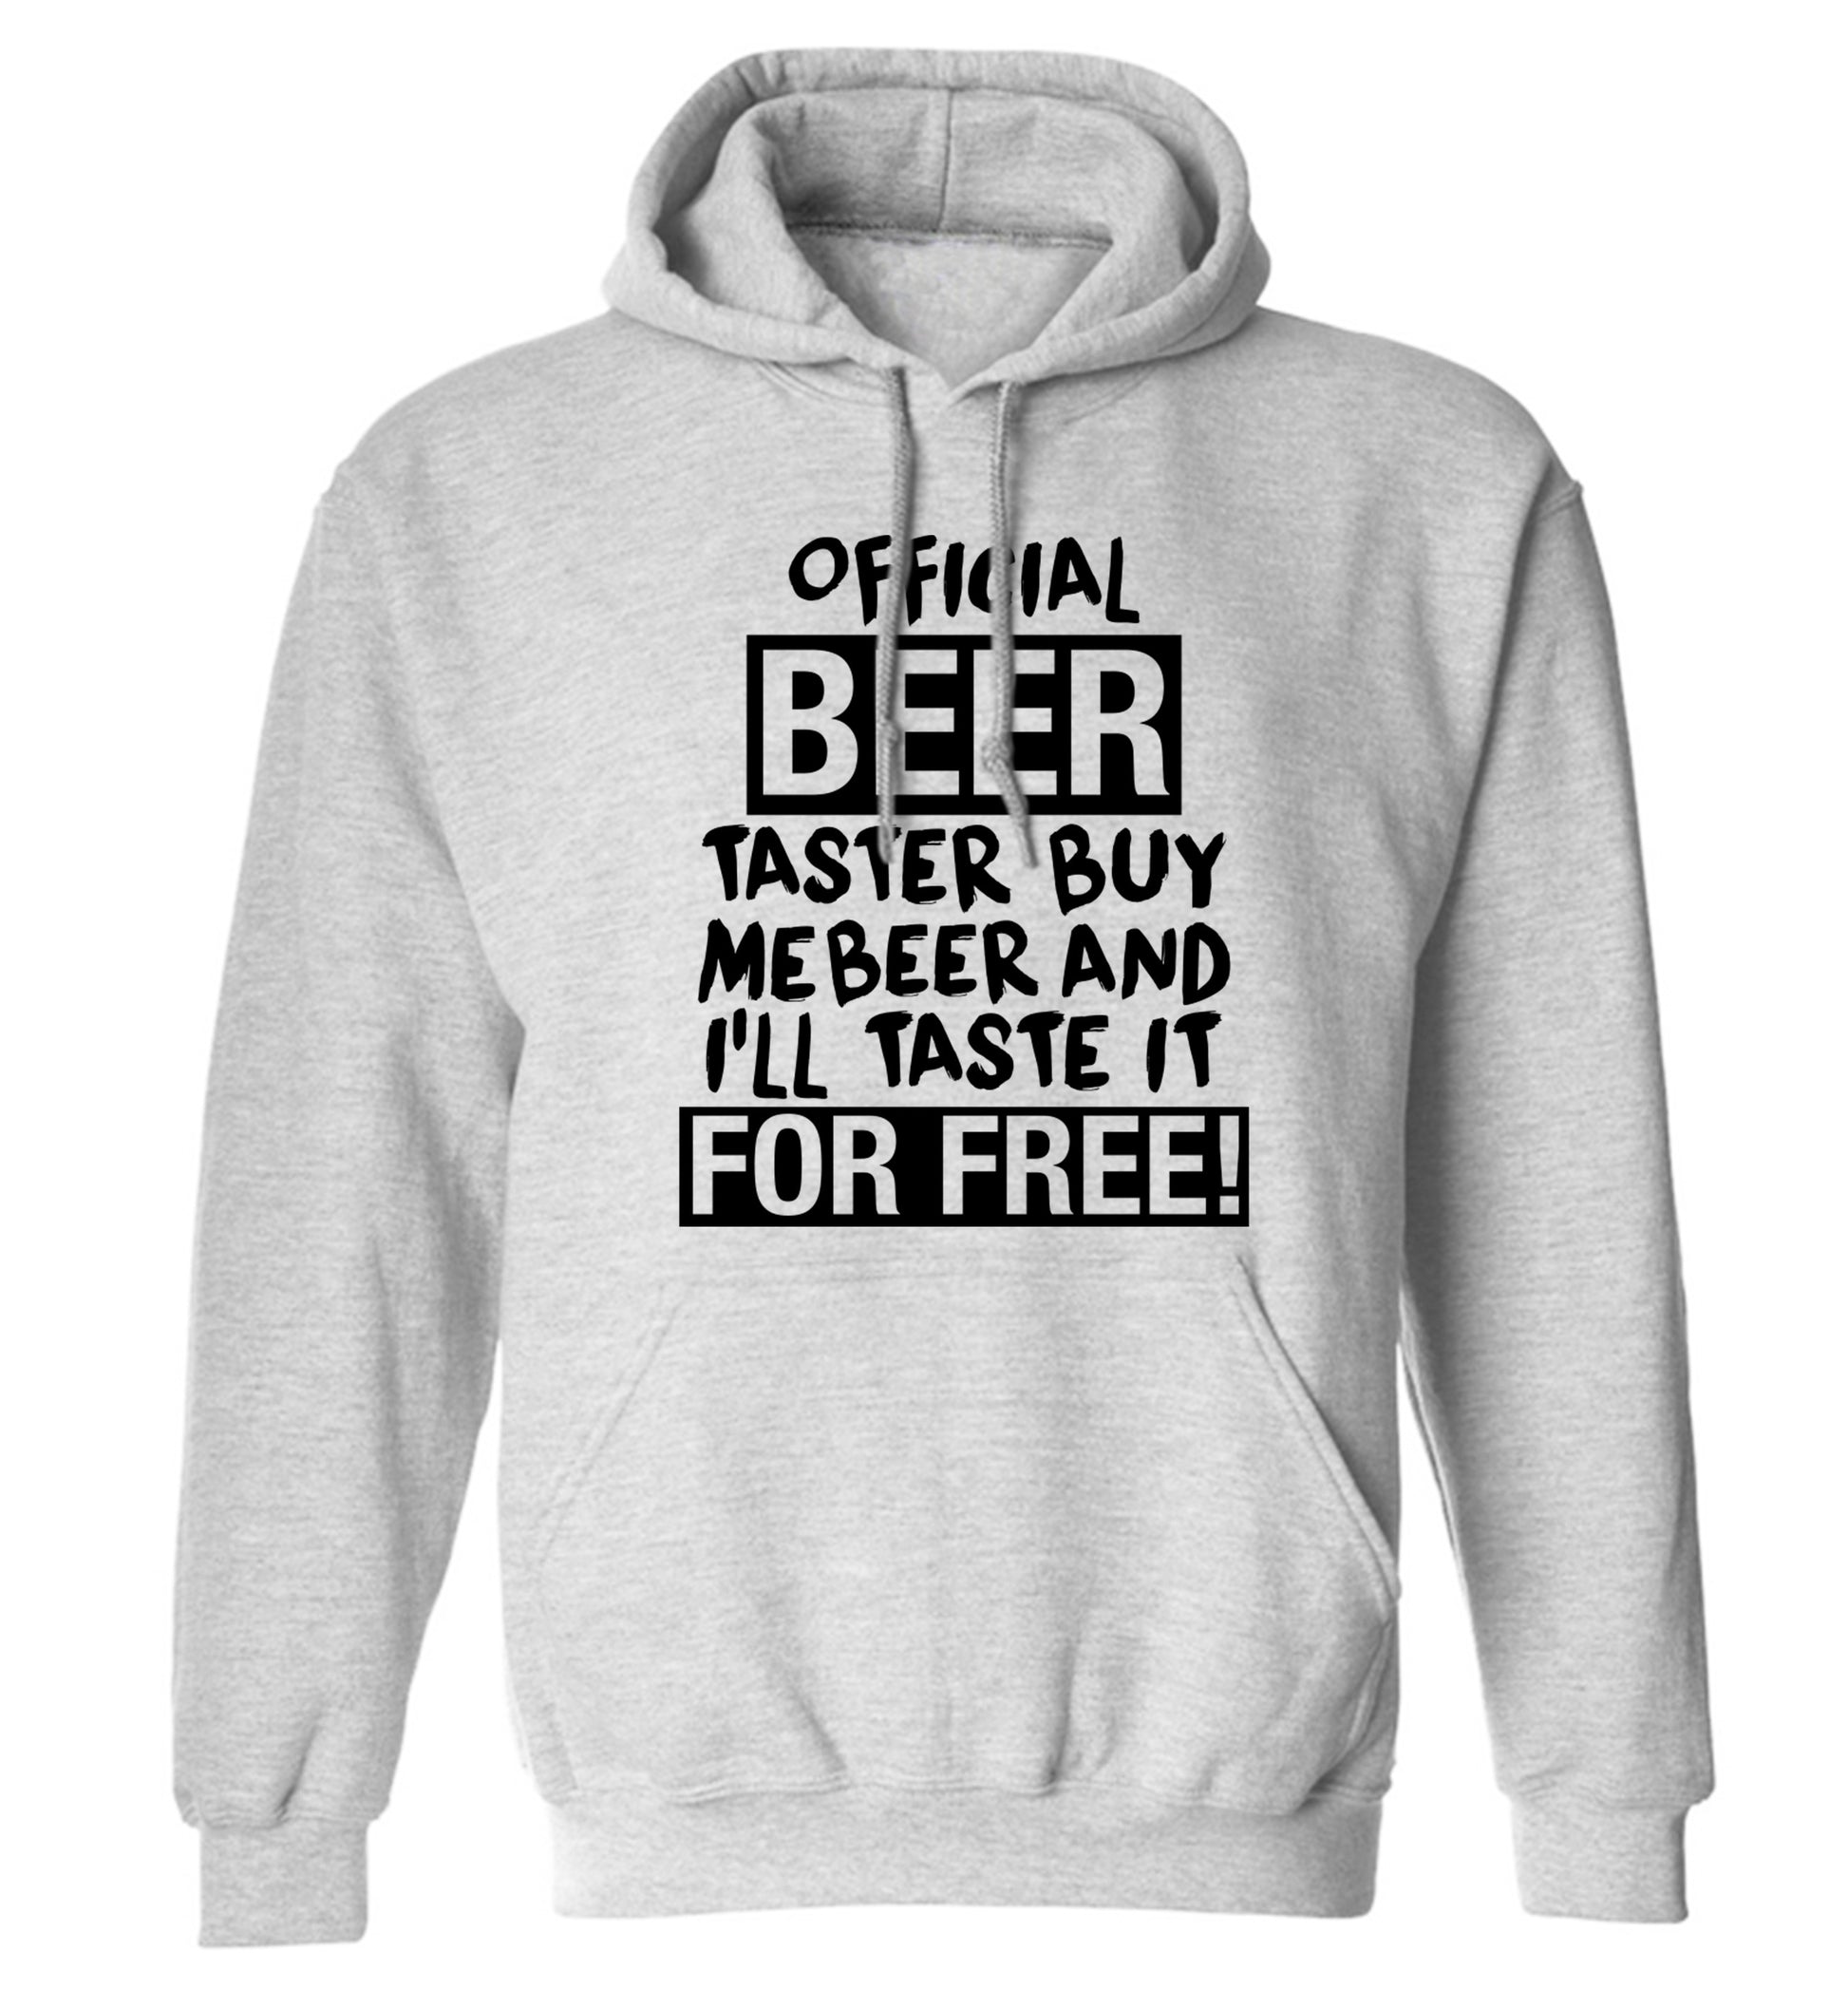 Official beer taster buy me beer and I'll taste it for free! adults unisex grey hoodie 2XL